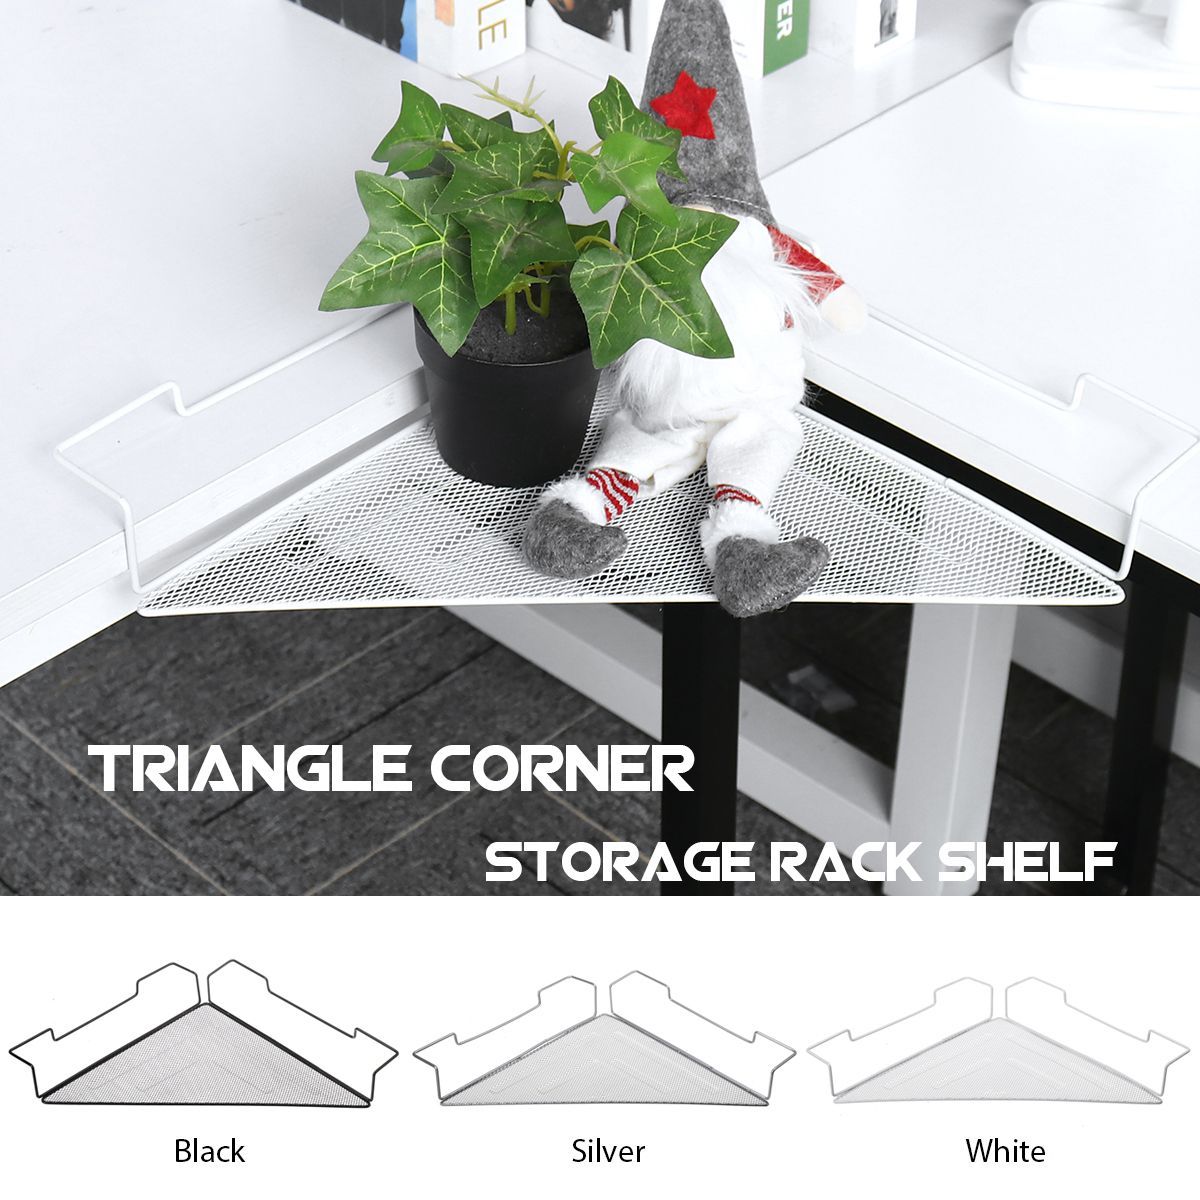 Storage-Rack-Shelf-Home-Office-Corner-Triangle-Iron-Desktop-Organizer-Plant-Holder-1626917